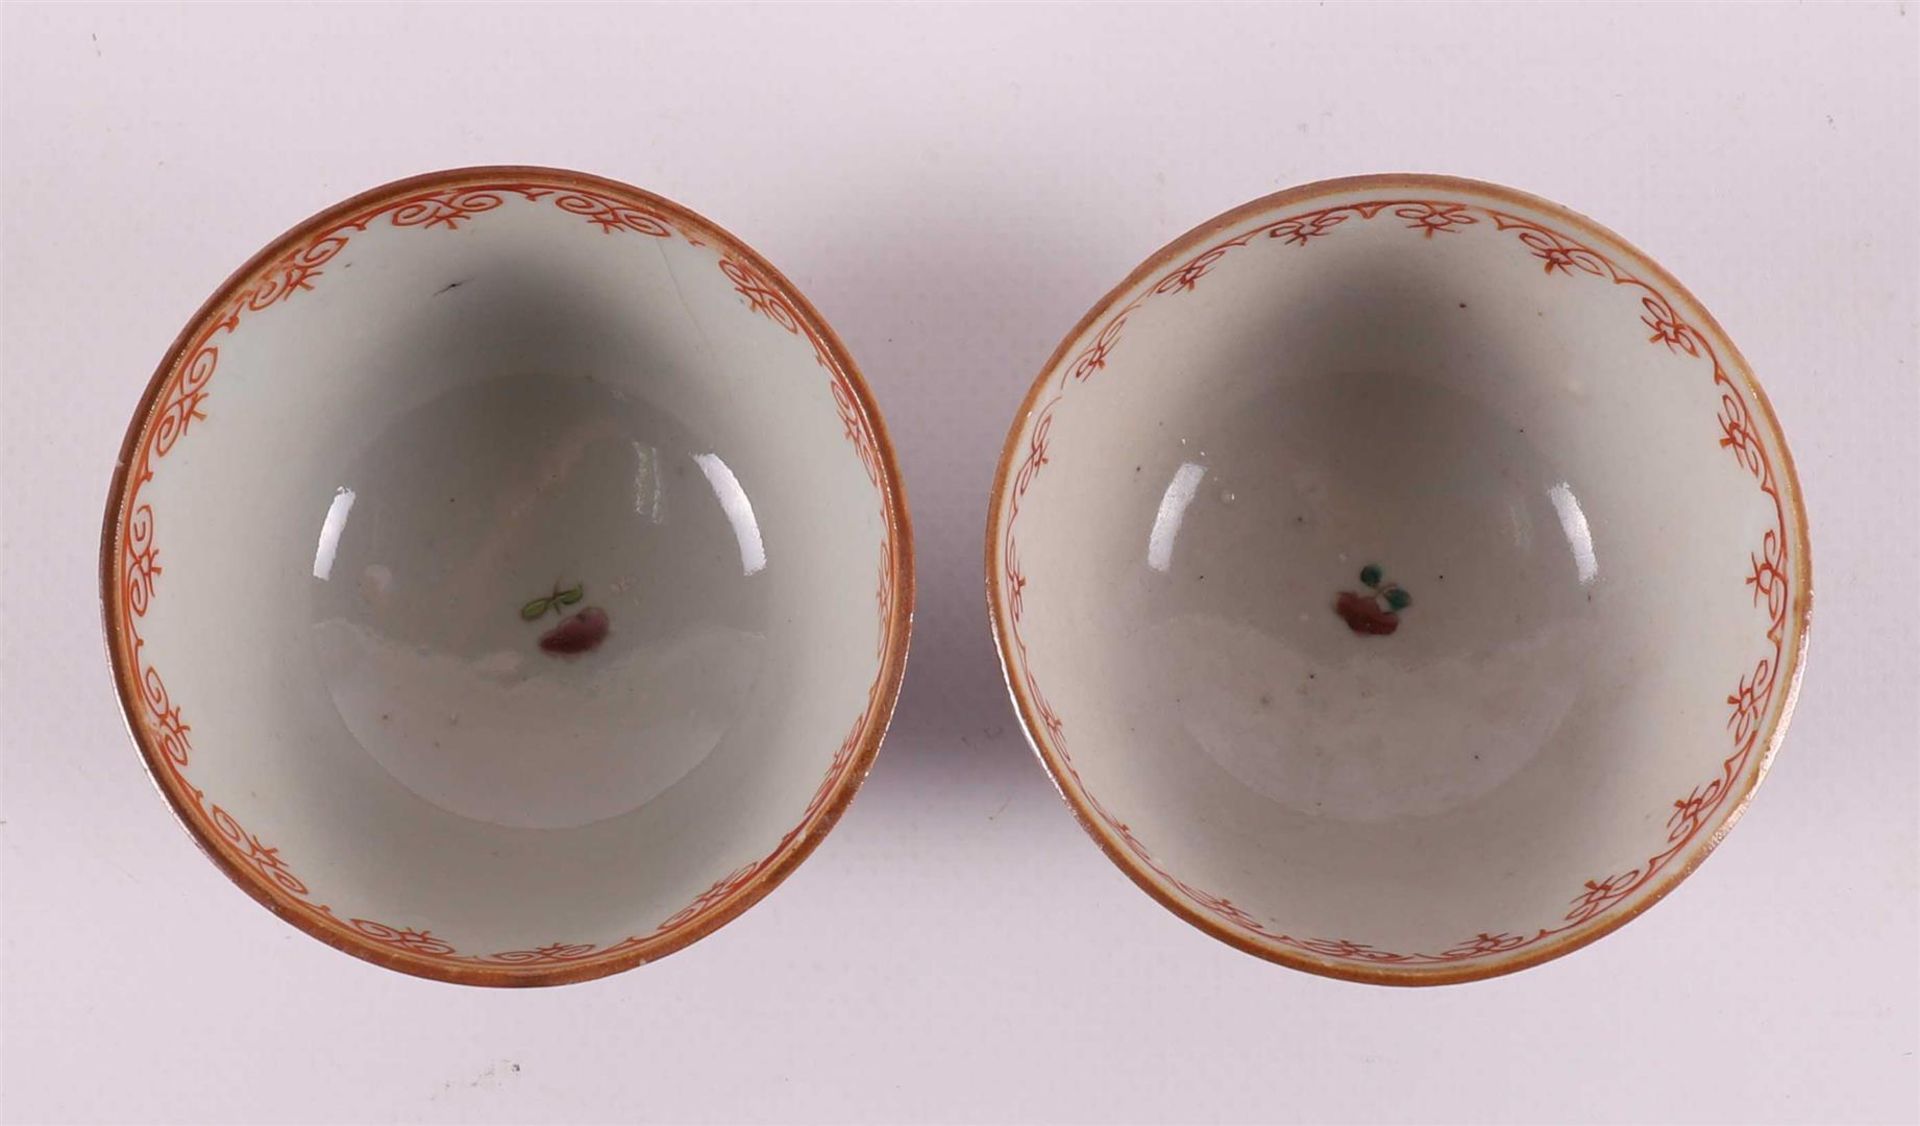 Seven famille rose porcelain cups and saucers, Batavia porcelain, China, - Image 22 of 27